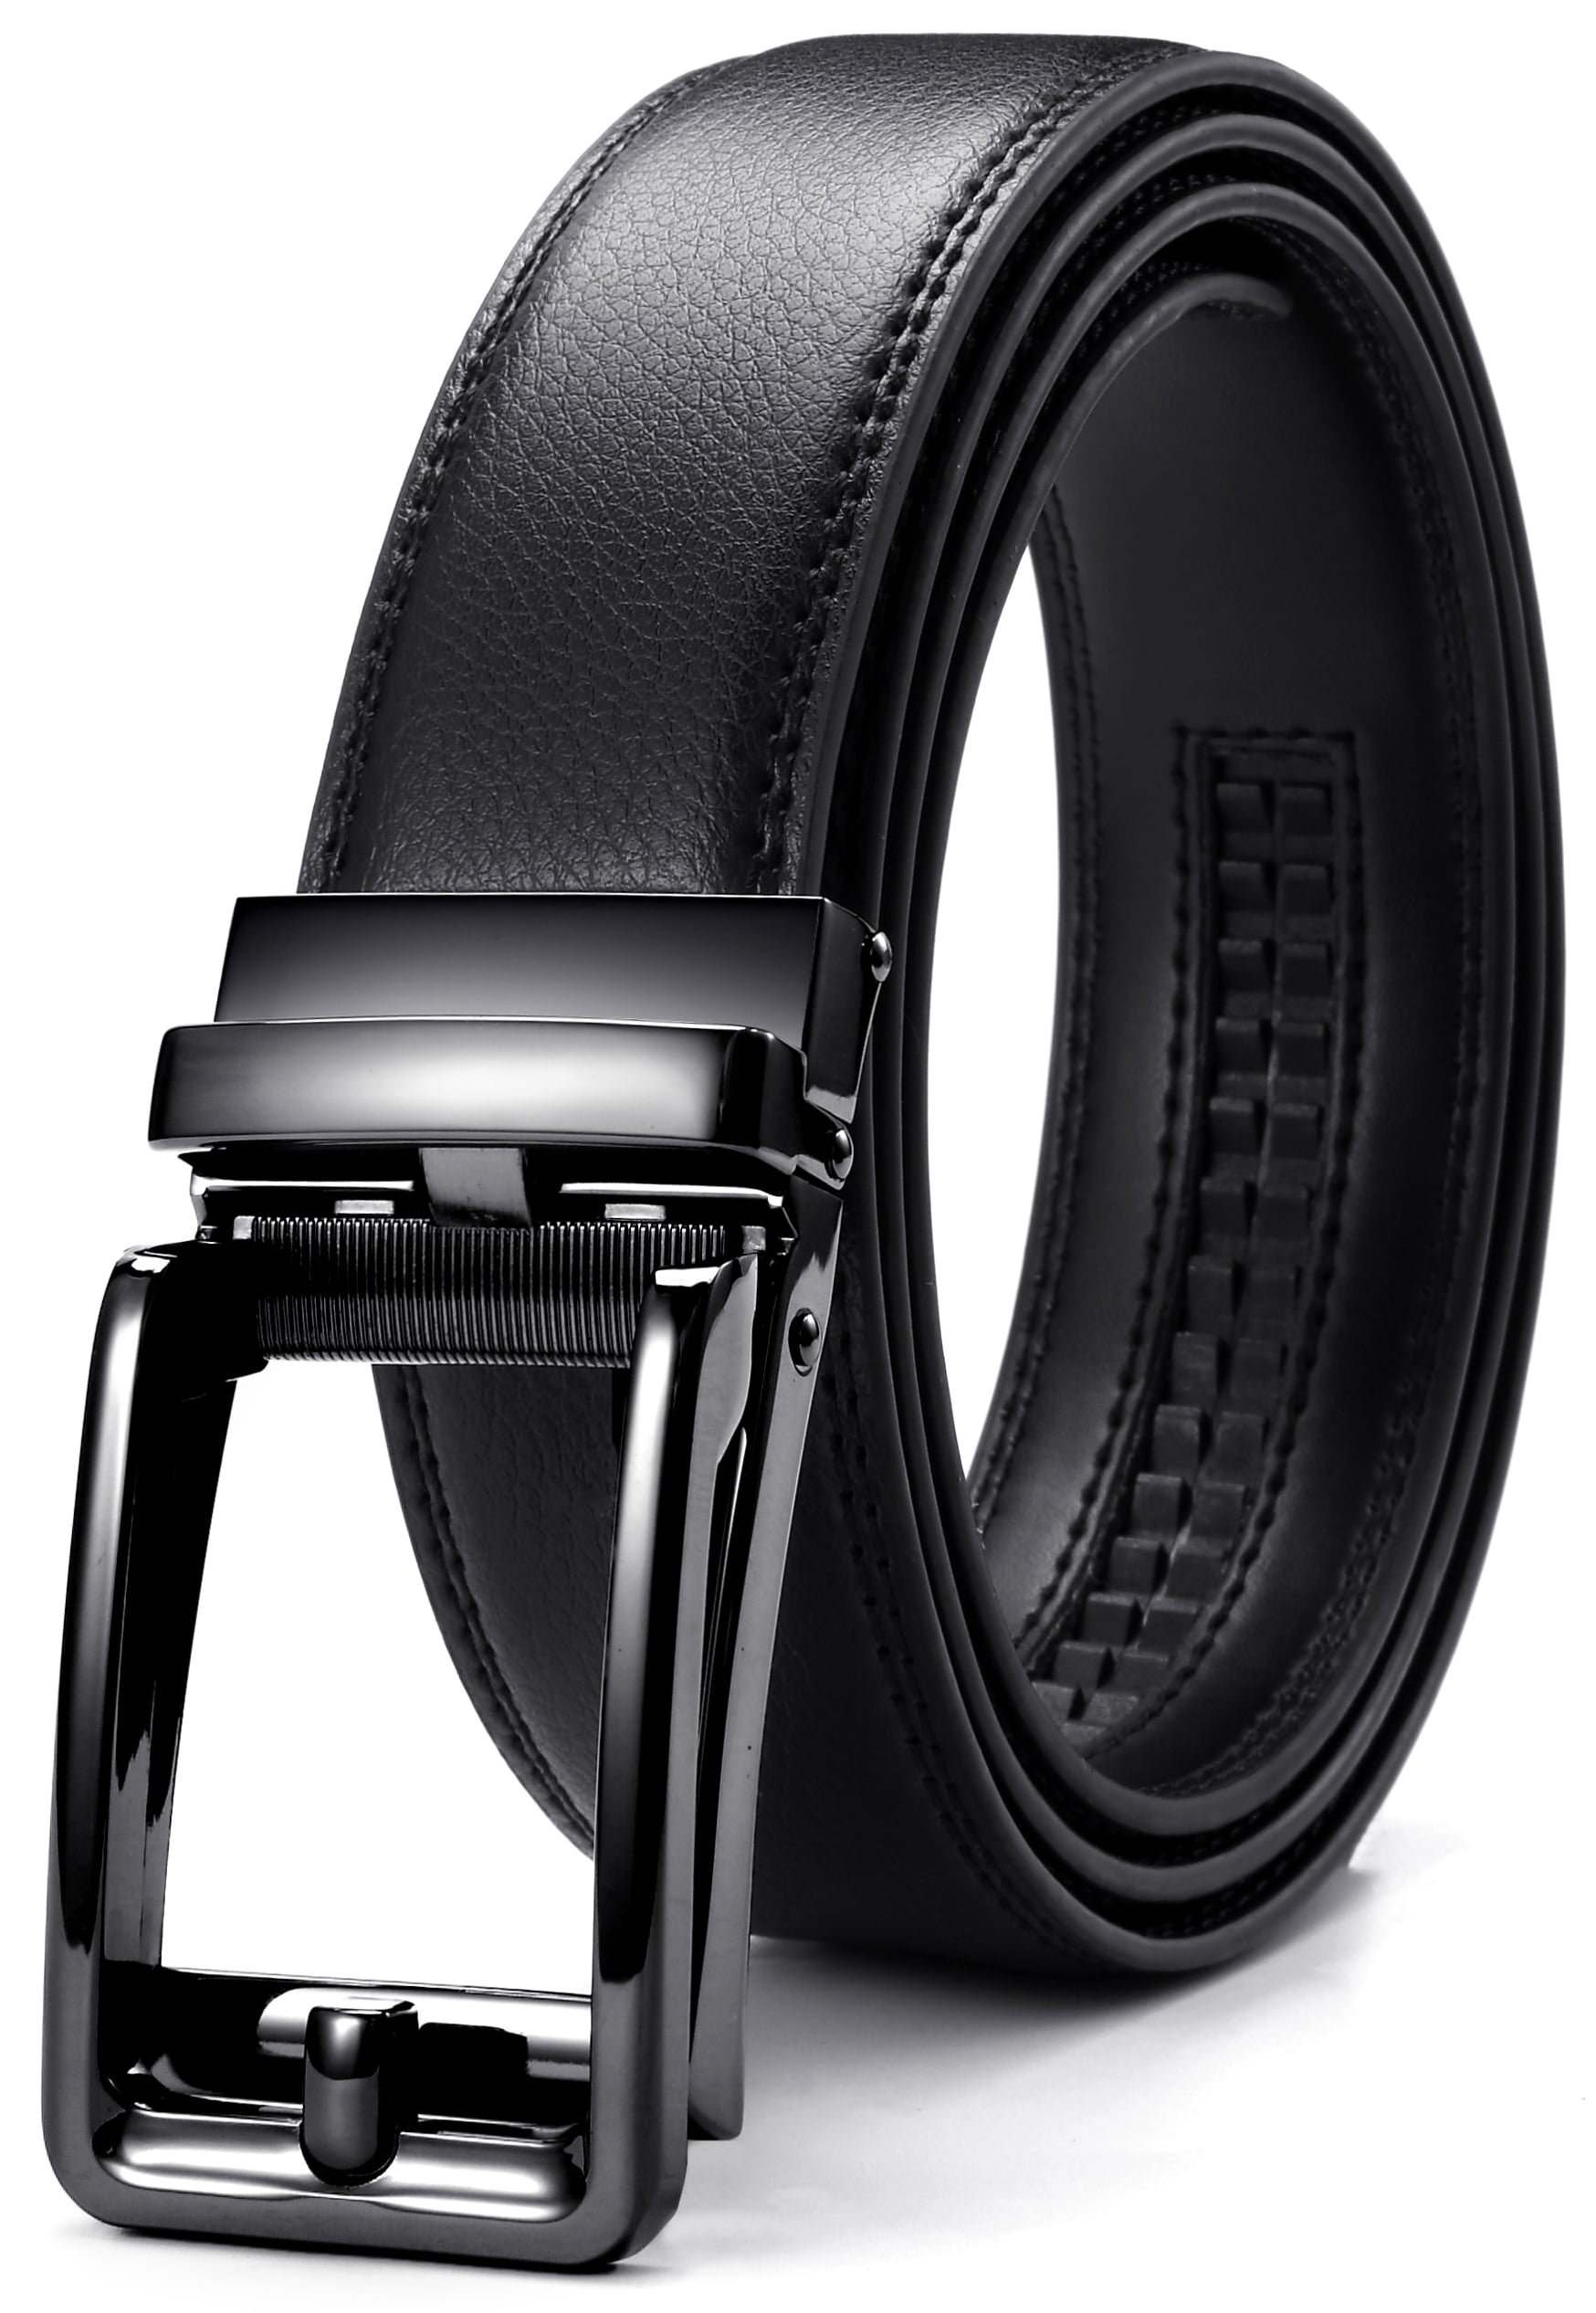 Leather Ratchet Dress Belt 2 Pack 1 3/8 Chaoren Click Adjustable Belt Comfort with Slide Buckle Trim to Exact Fit